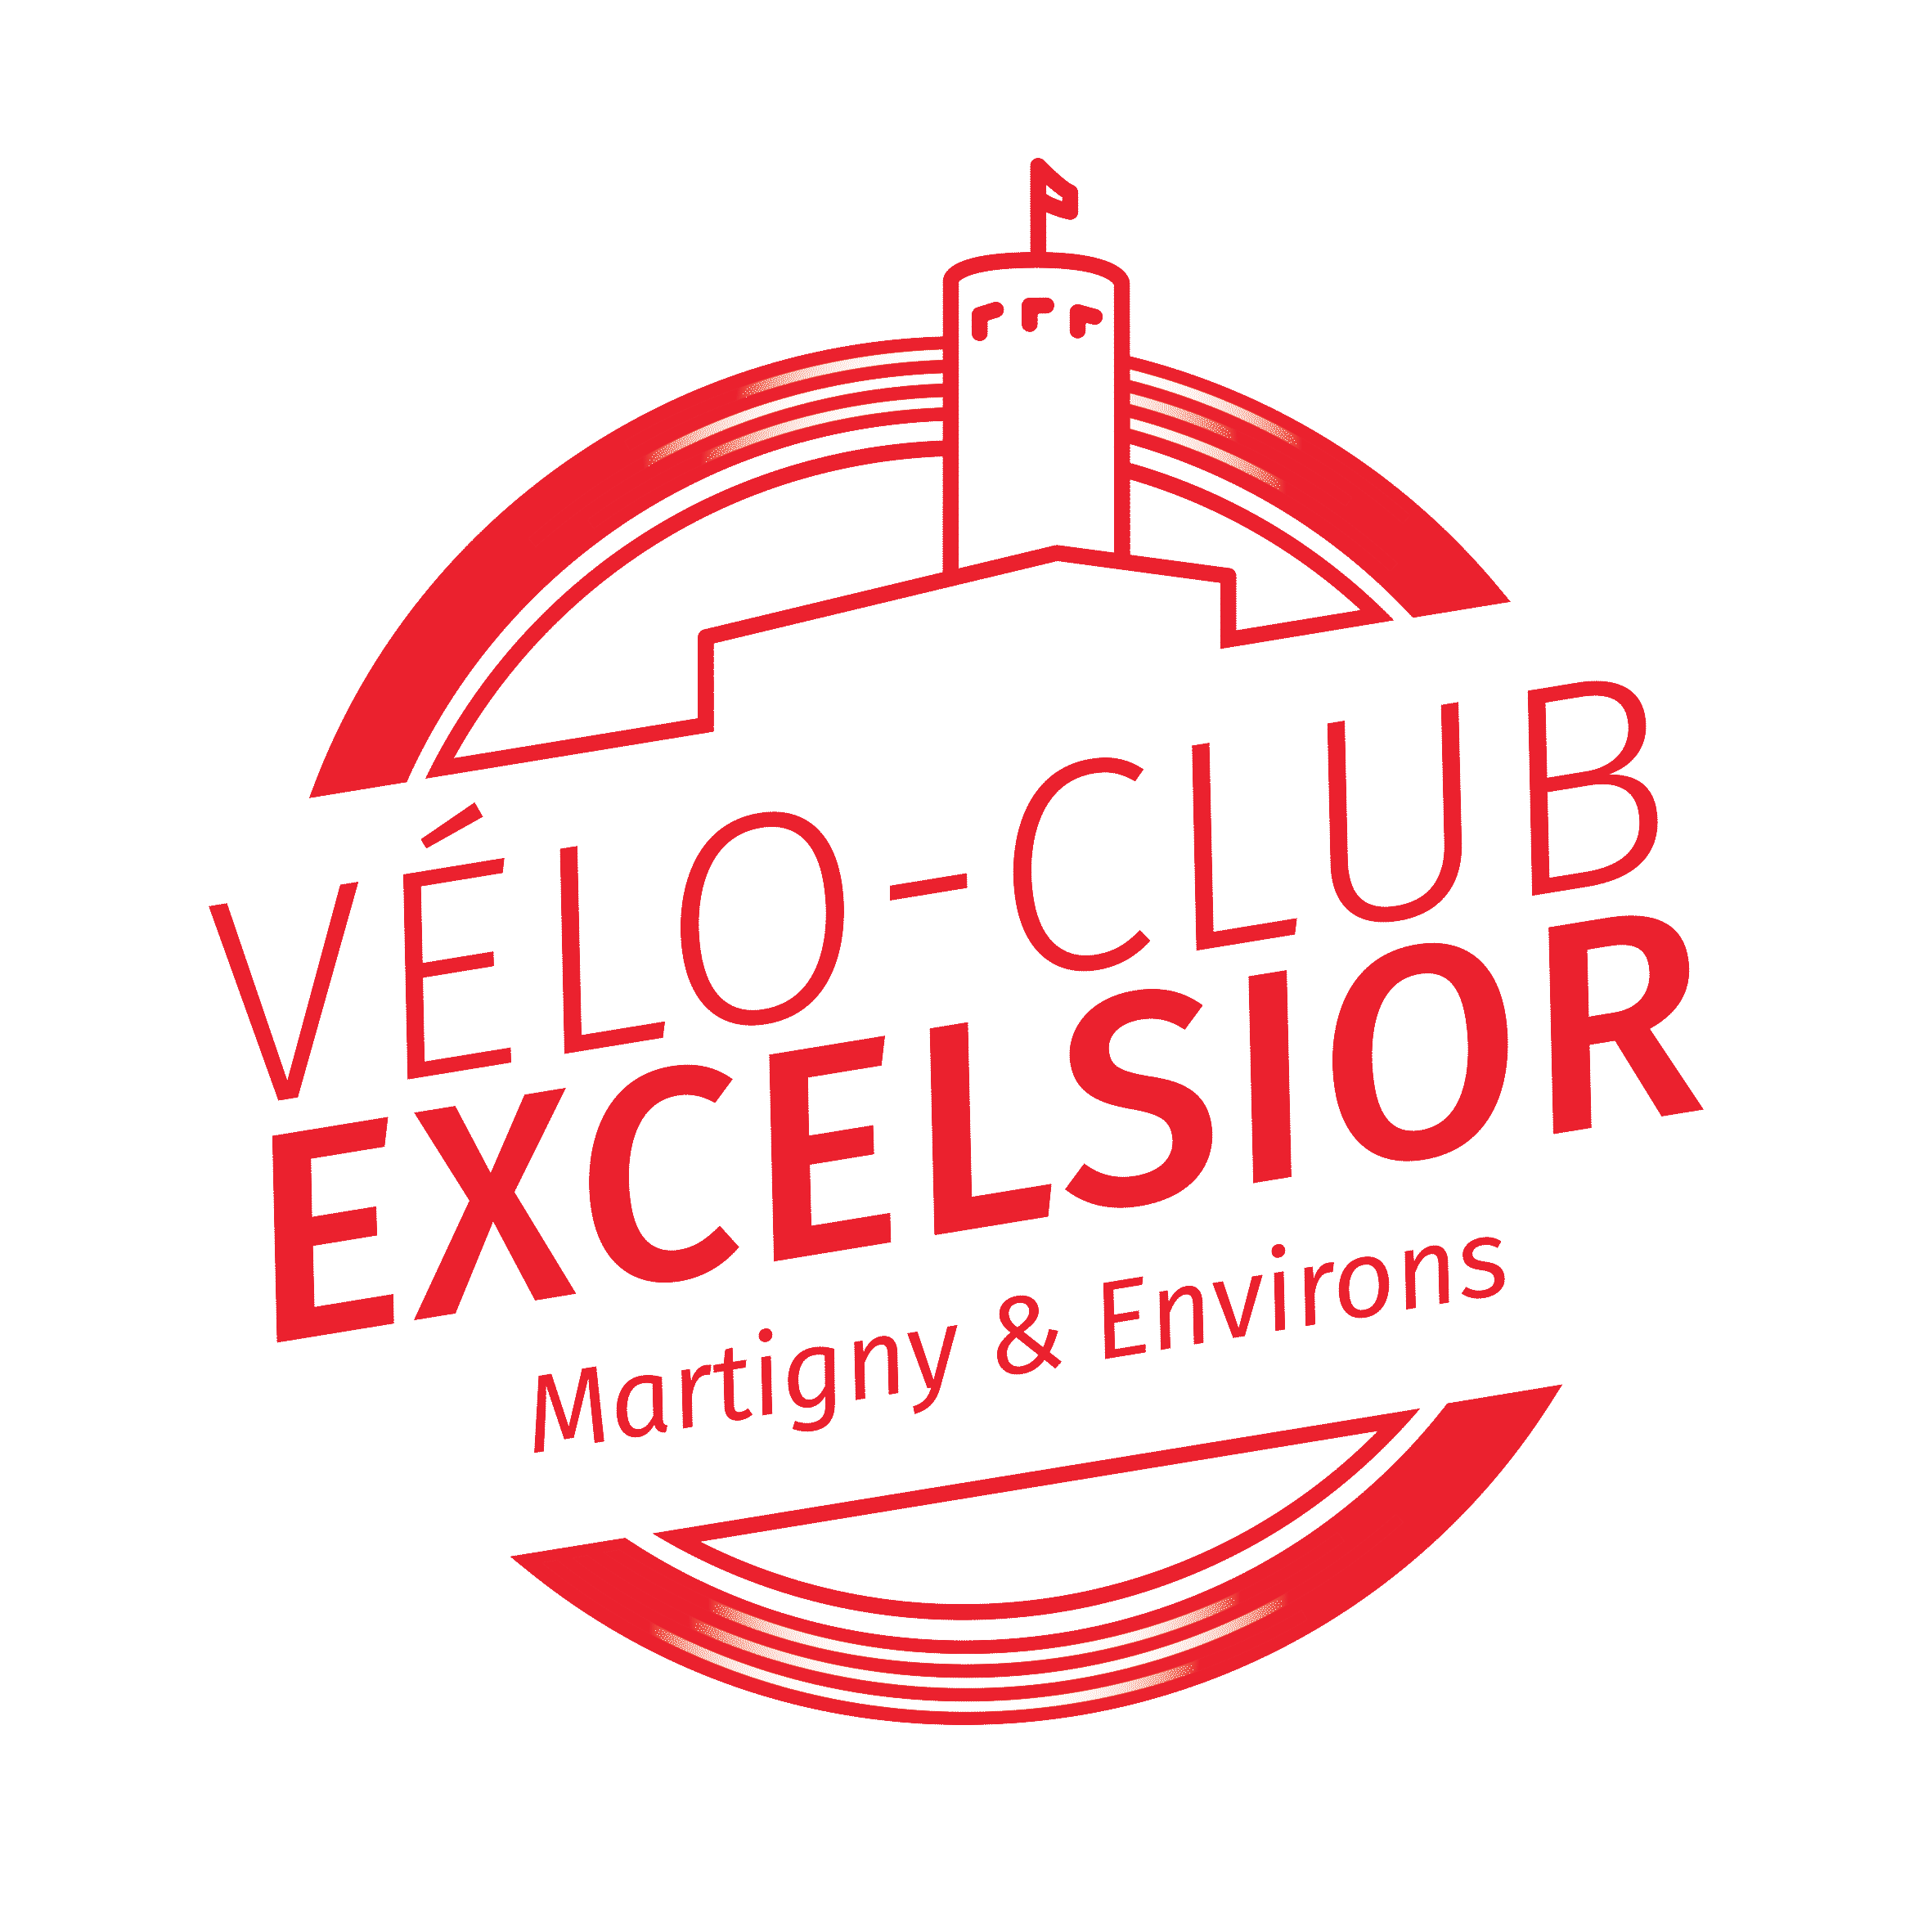 Vélo-club Excelsior